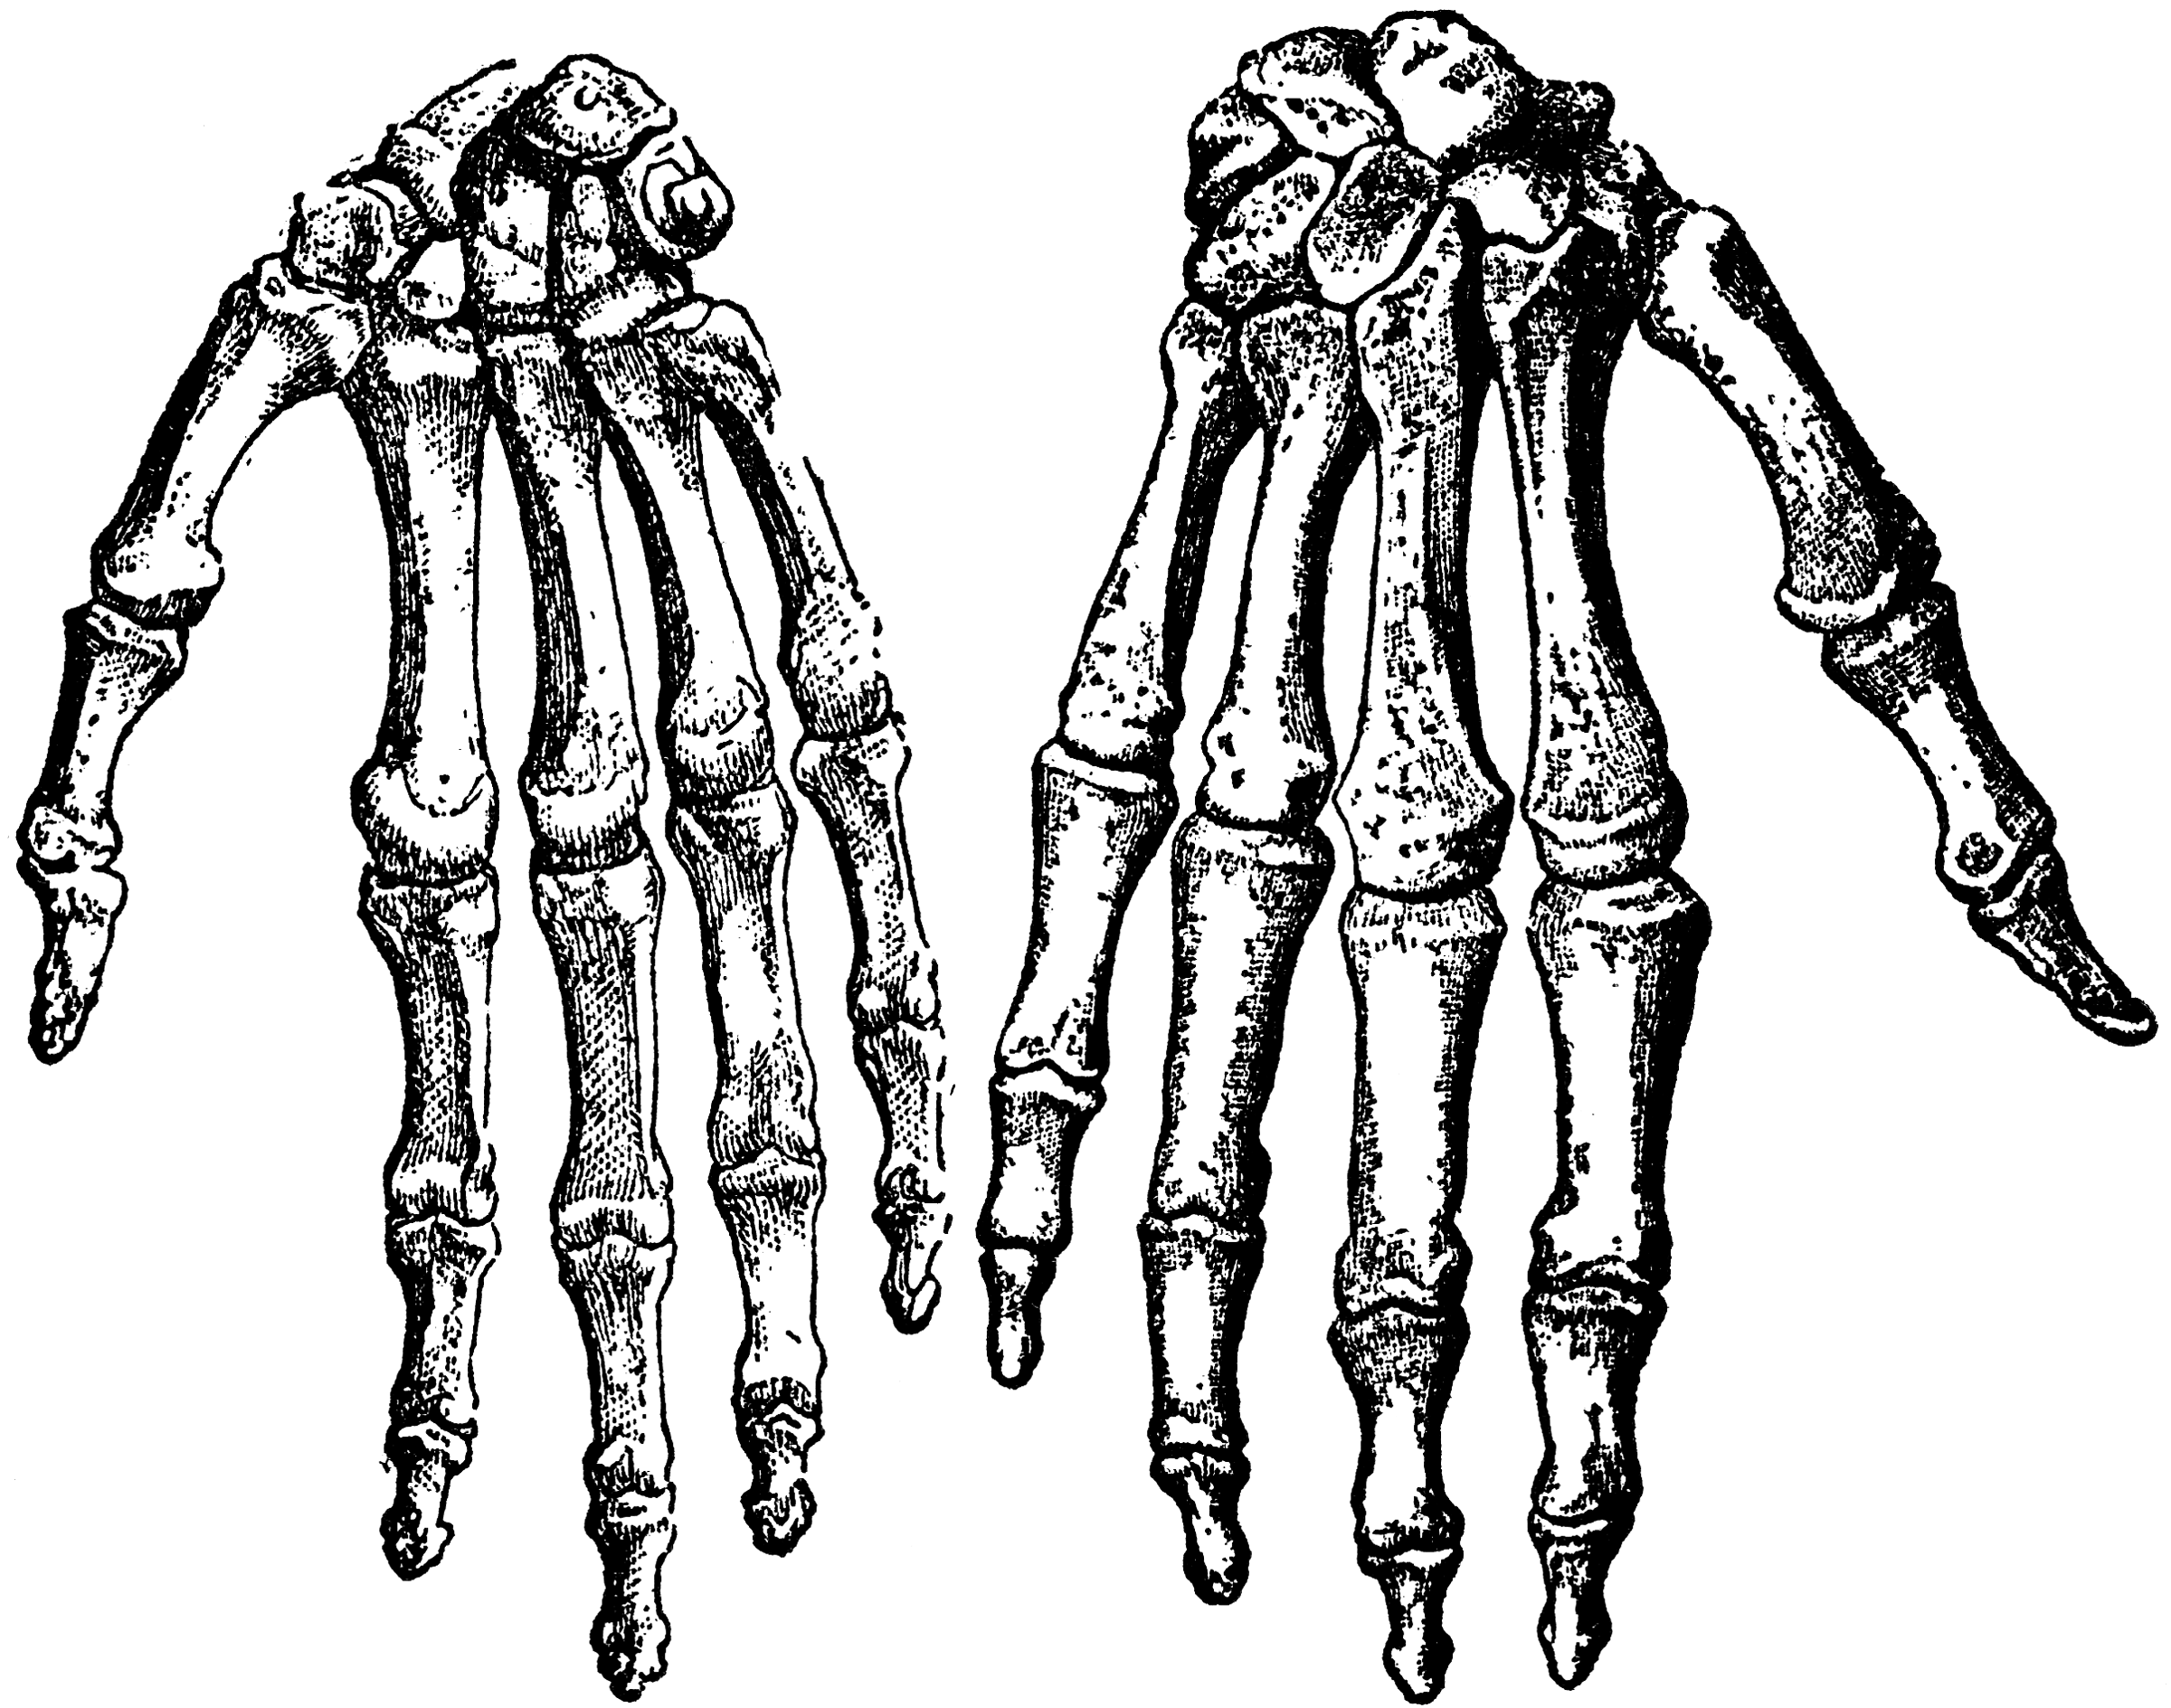 Bones of the Hand | ClipArt ETC